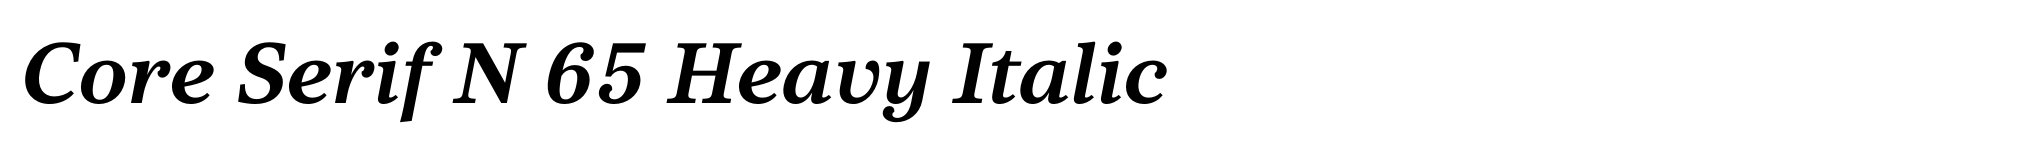 Core Serif N 65 Heavy Italic image